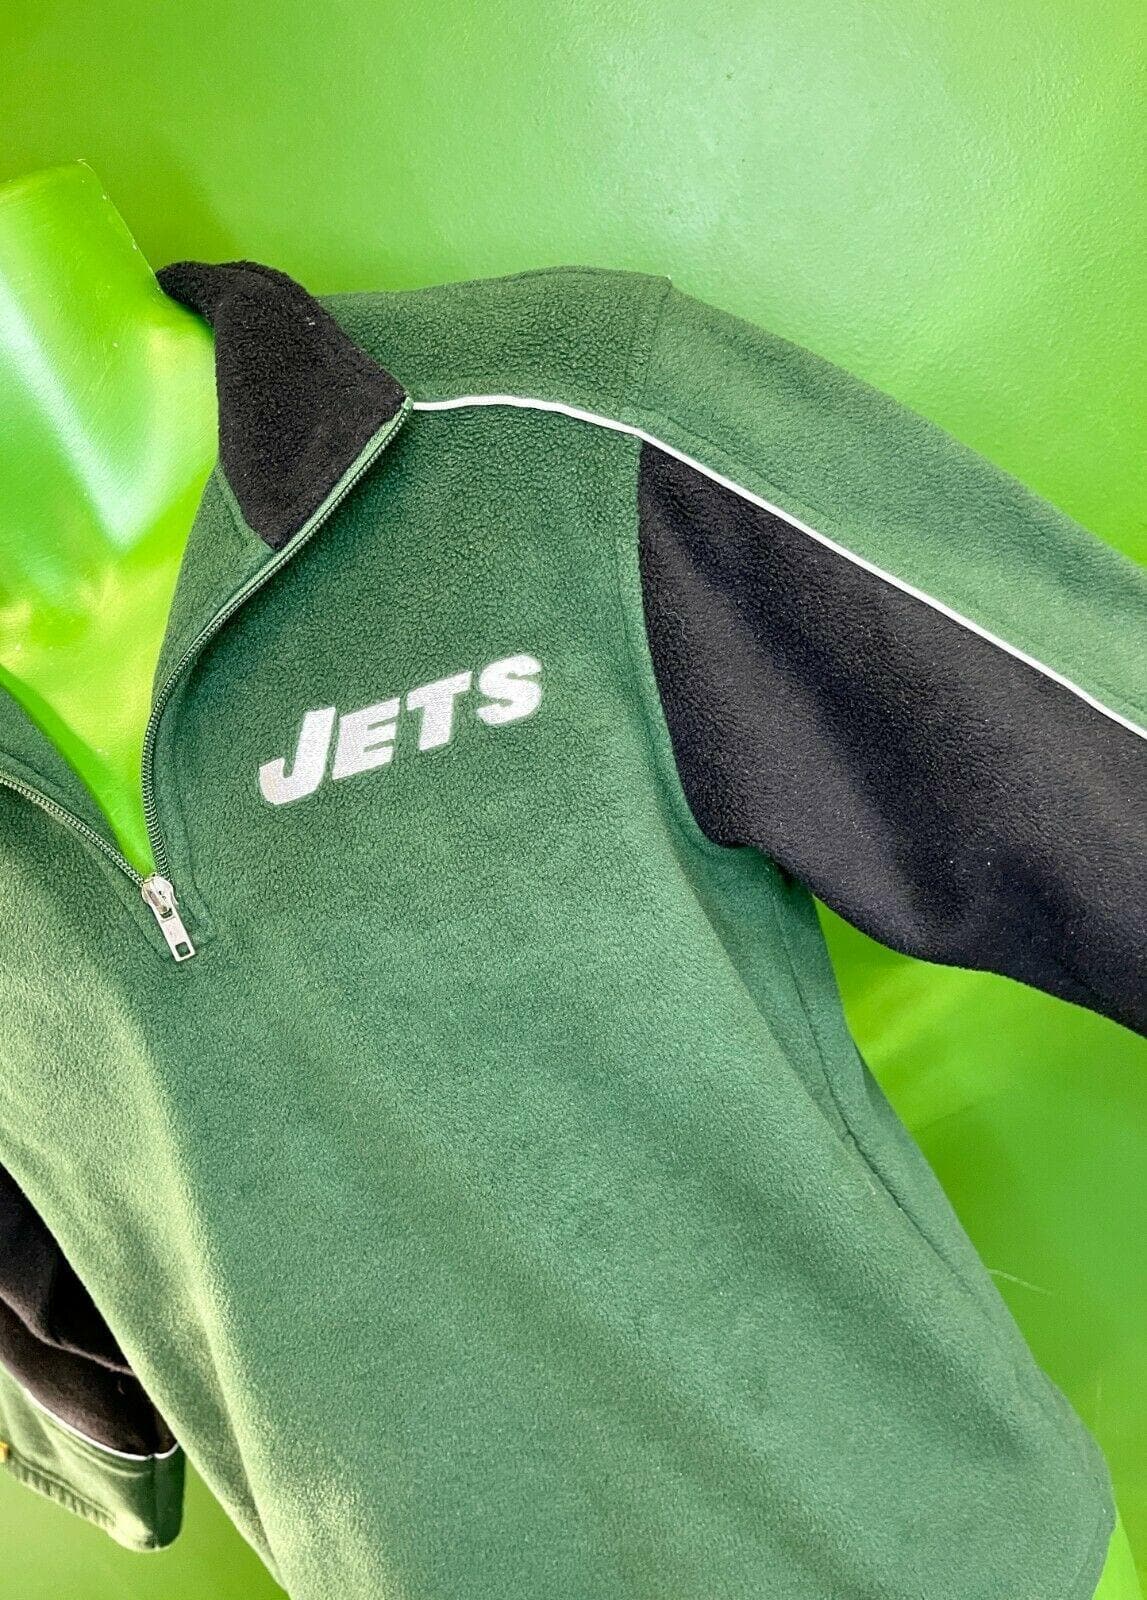 NFL New York Jets Reebok Fleece 1-4 Zip Pullover Jacket Youth M 10-12